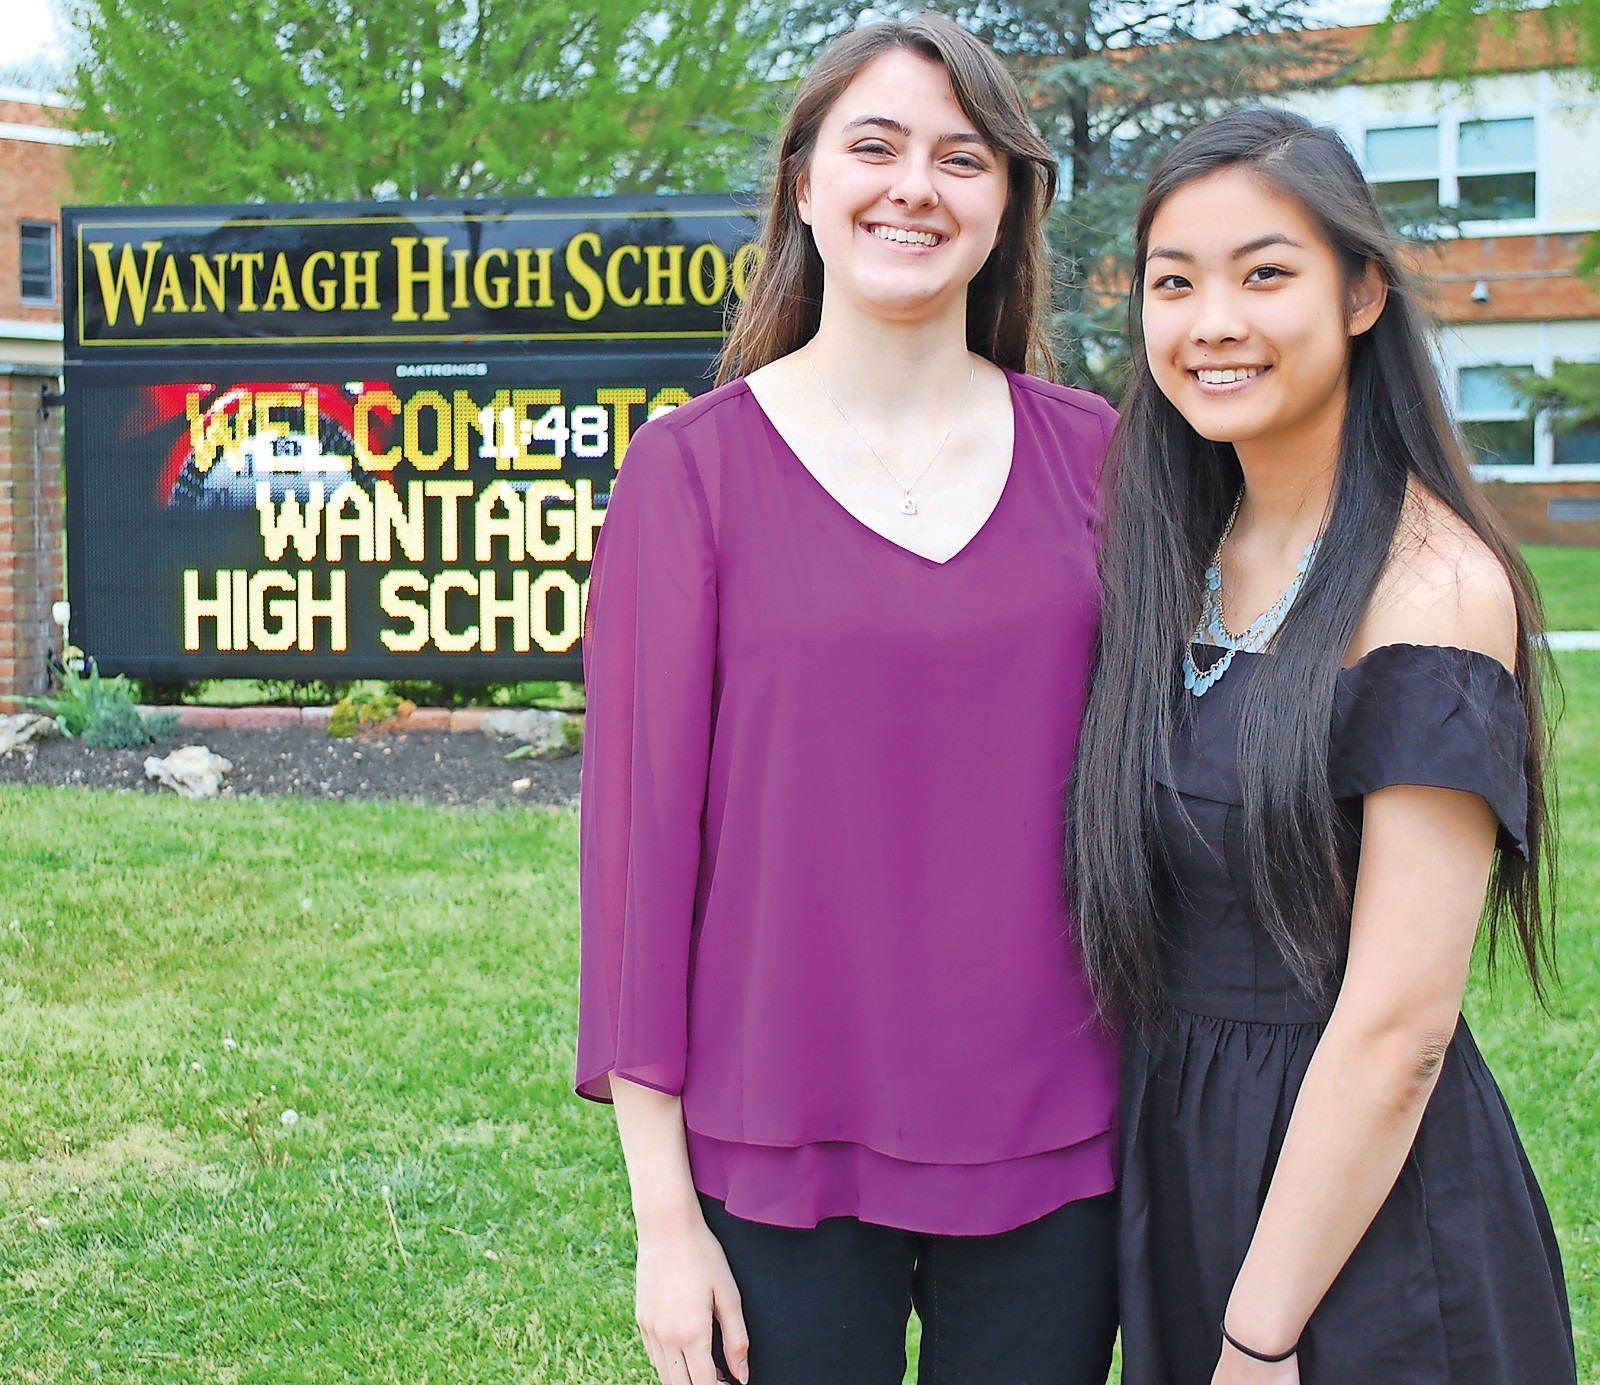 Lauren Bednor, left, and Sophia Liu are the valedictorian and salutatorian of Wantagh High School’s class of 2016.